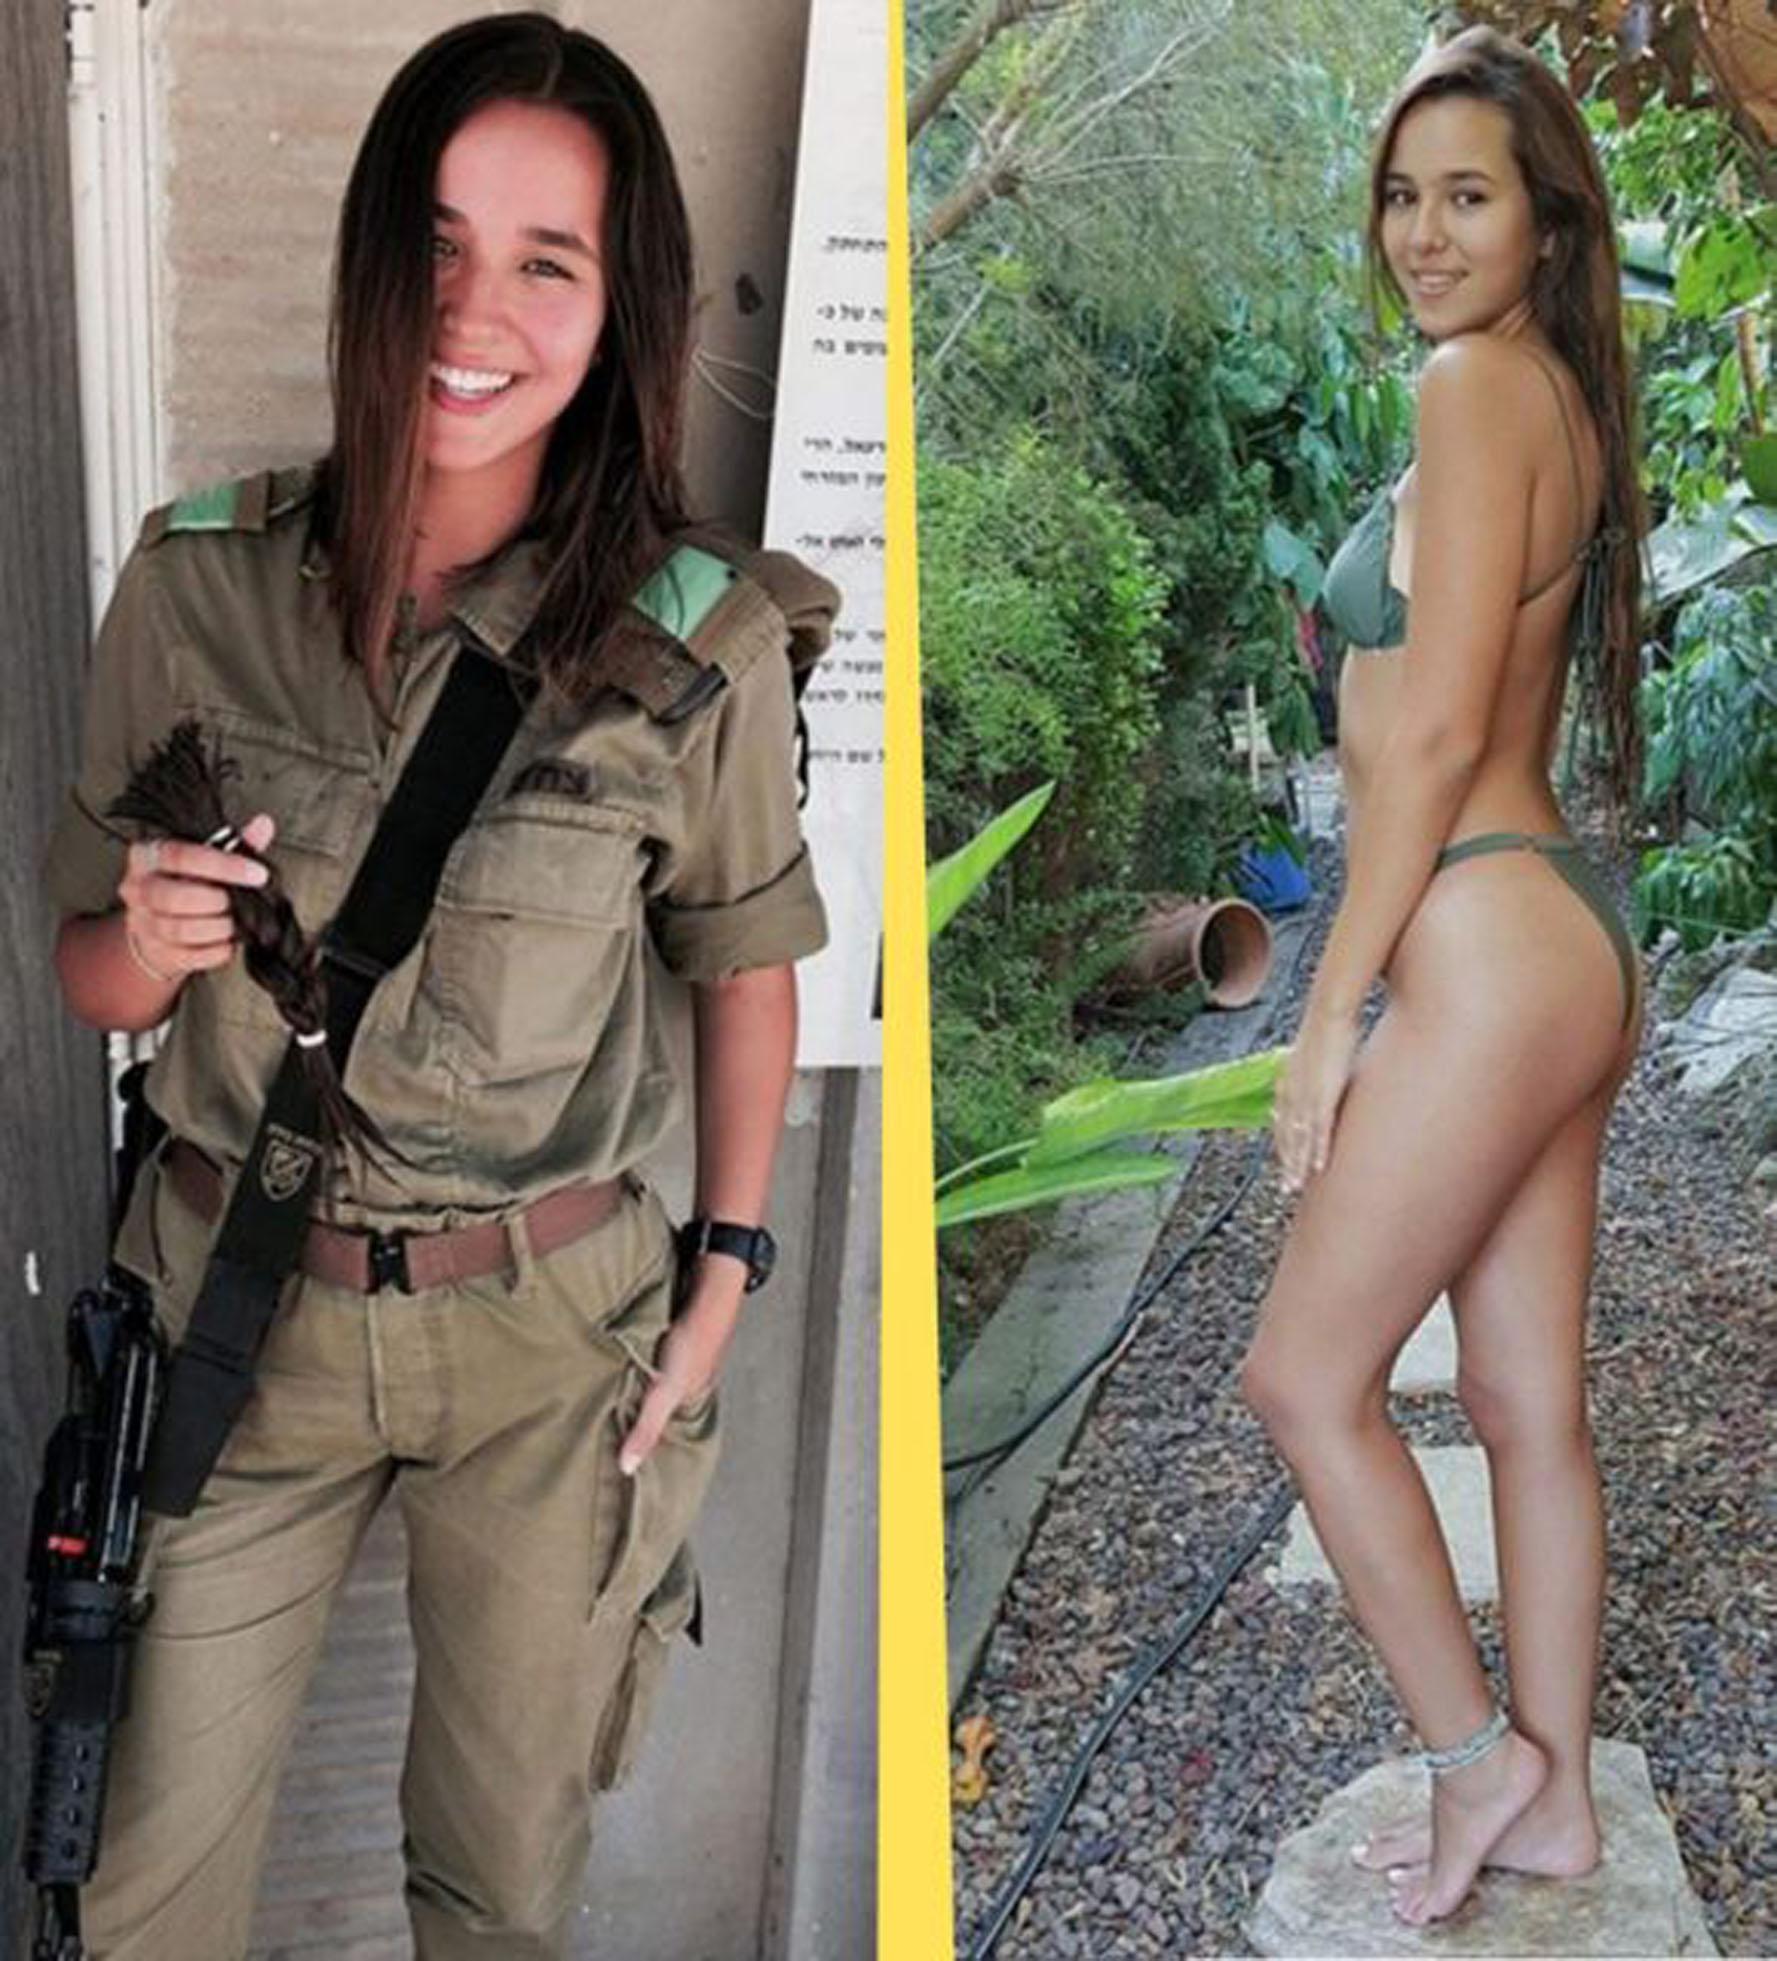 dawn mccauley share beautiful israeli women nude photos